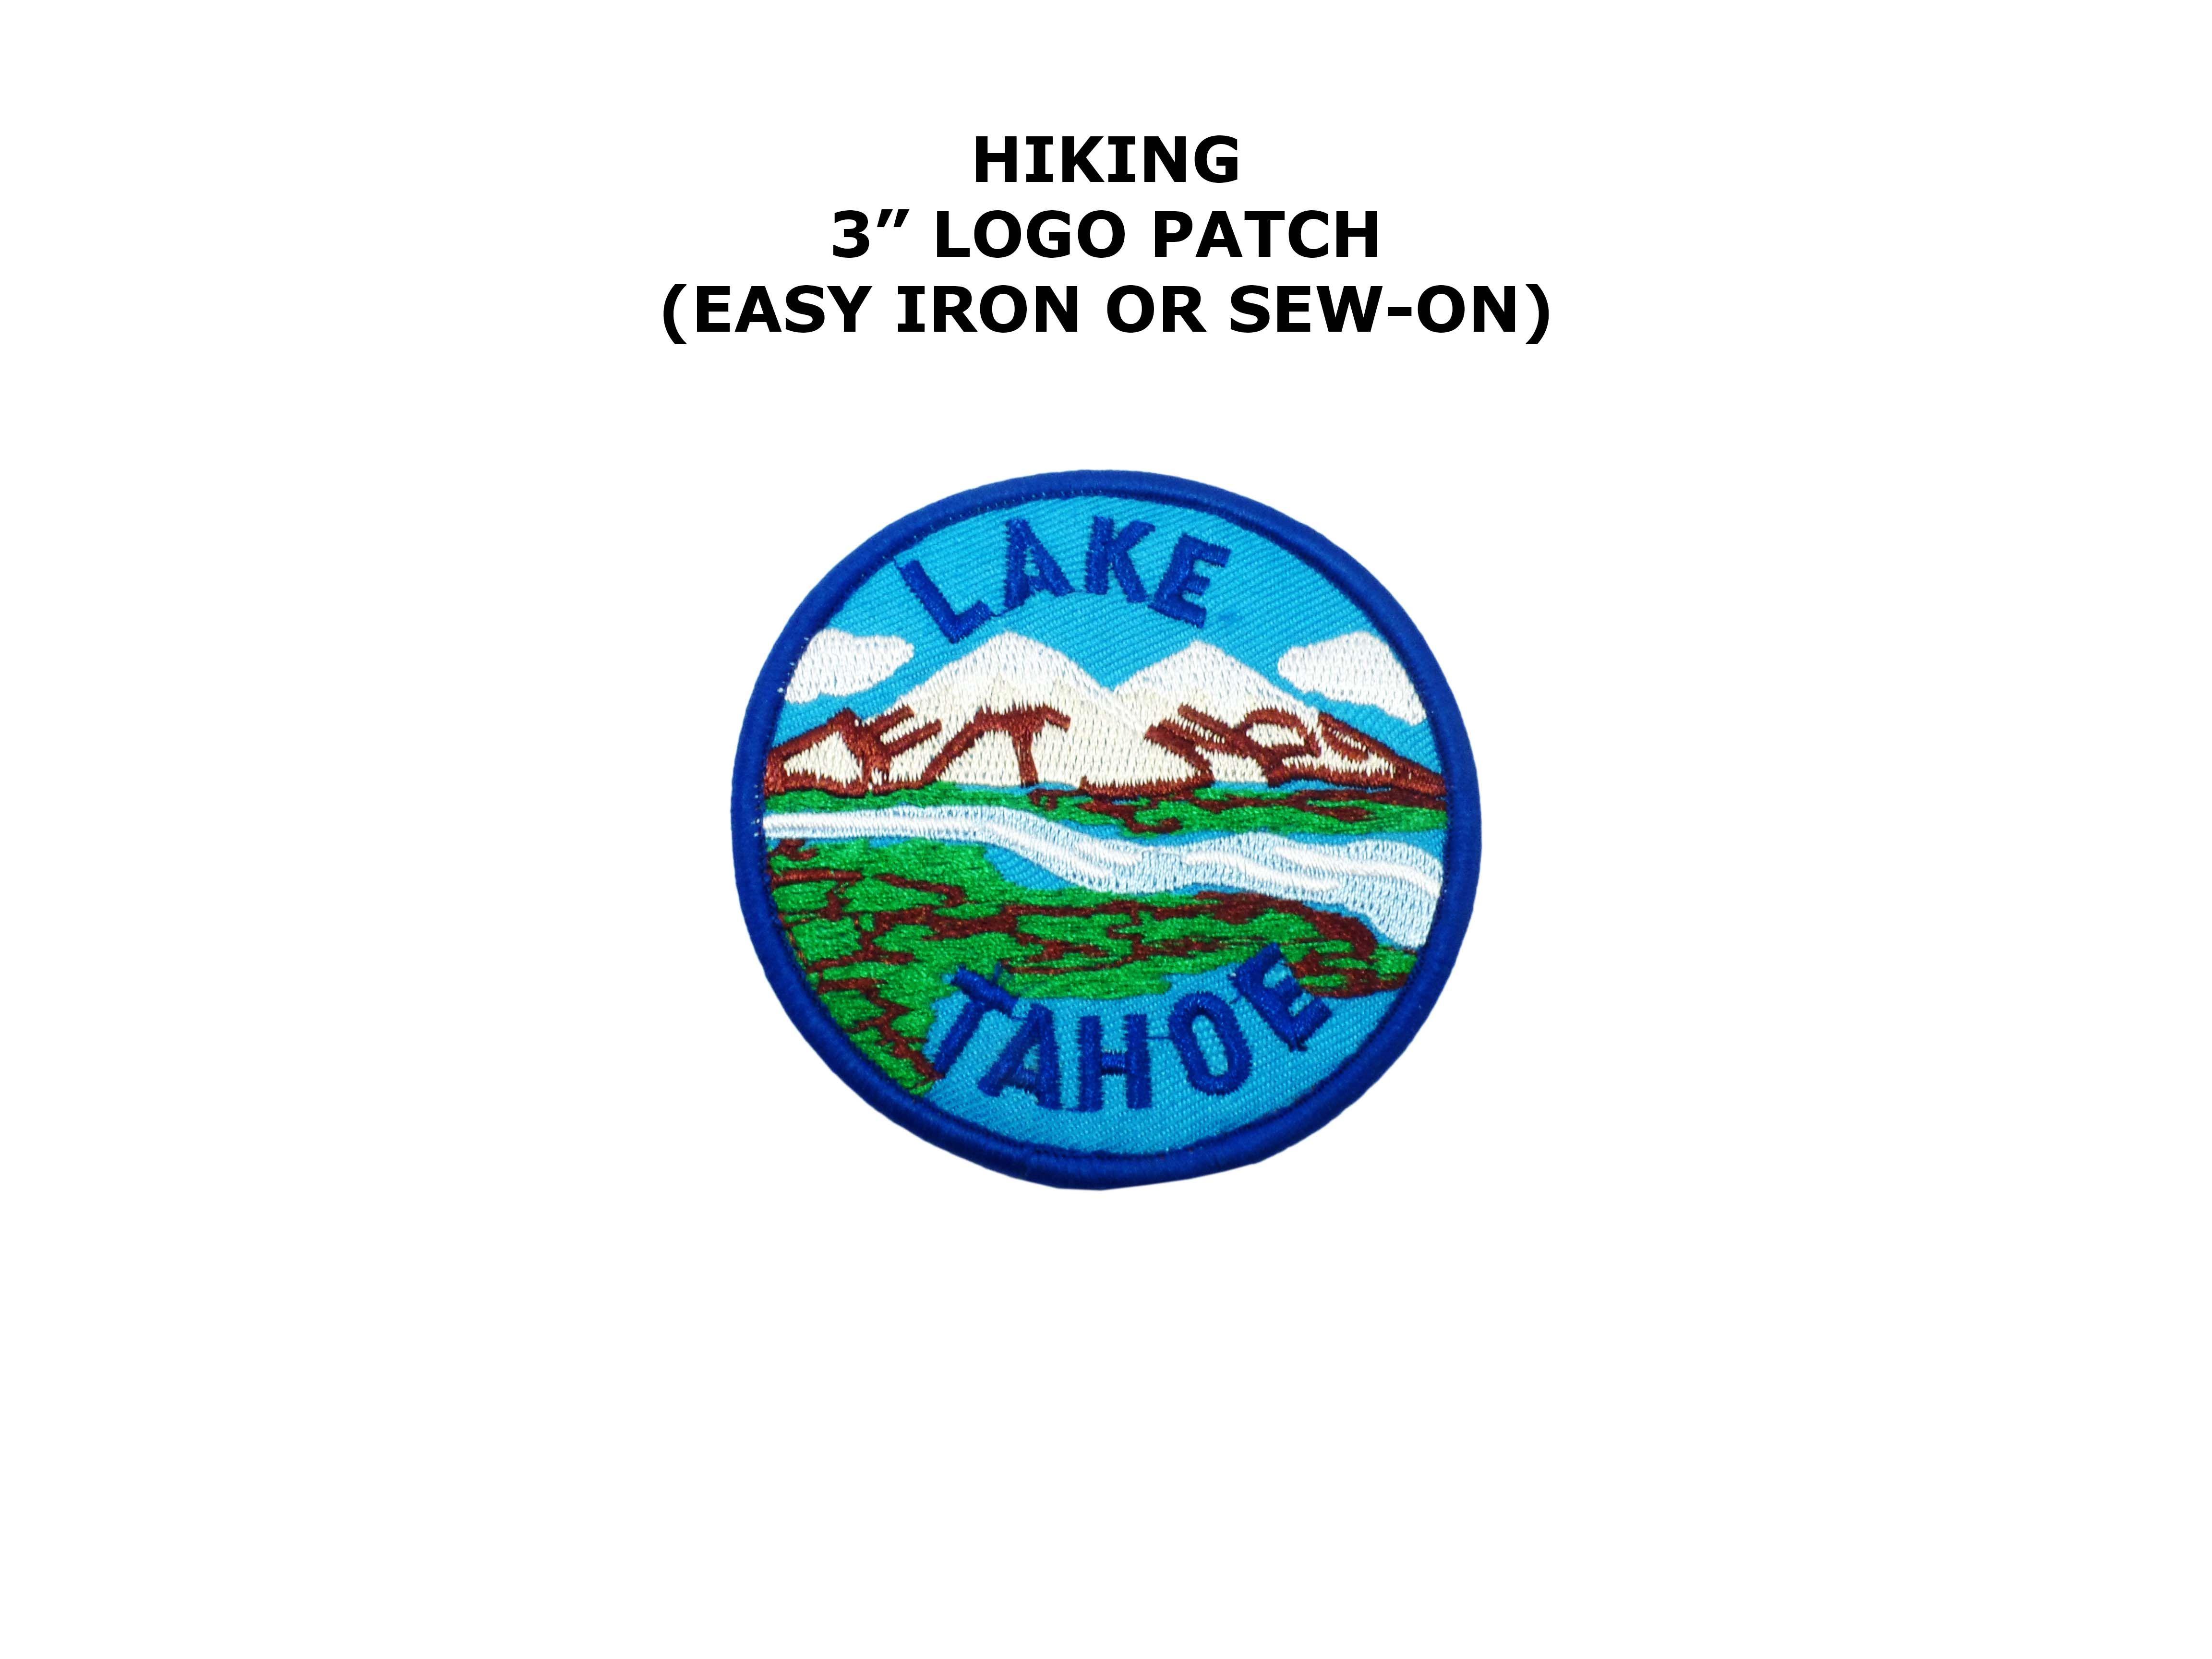 Sierra Water Logo - Lake Tahoe Sierra Nevada Embroidered Iron/Sew-on Hiking Theme Logo ...